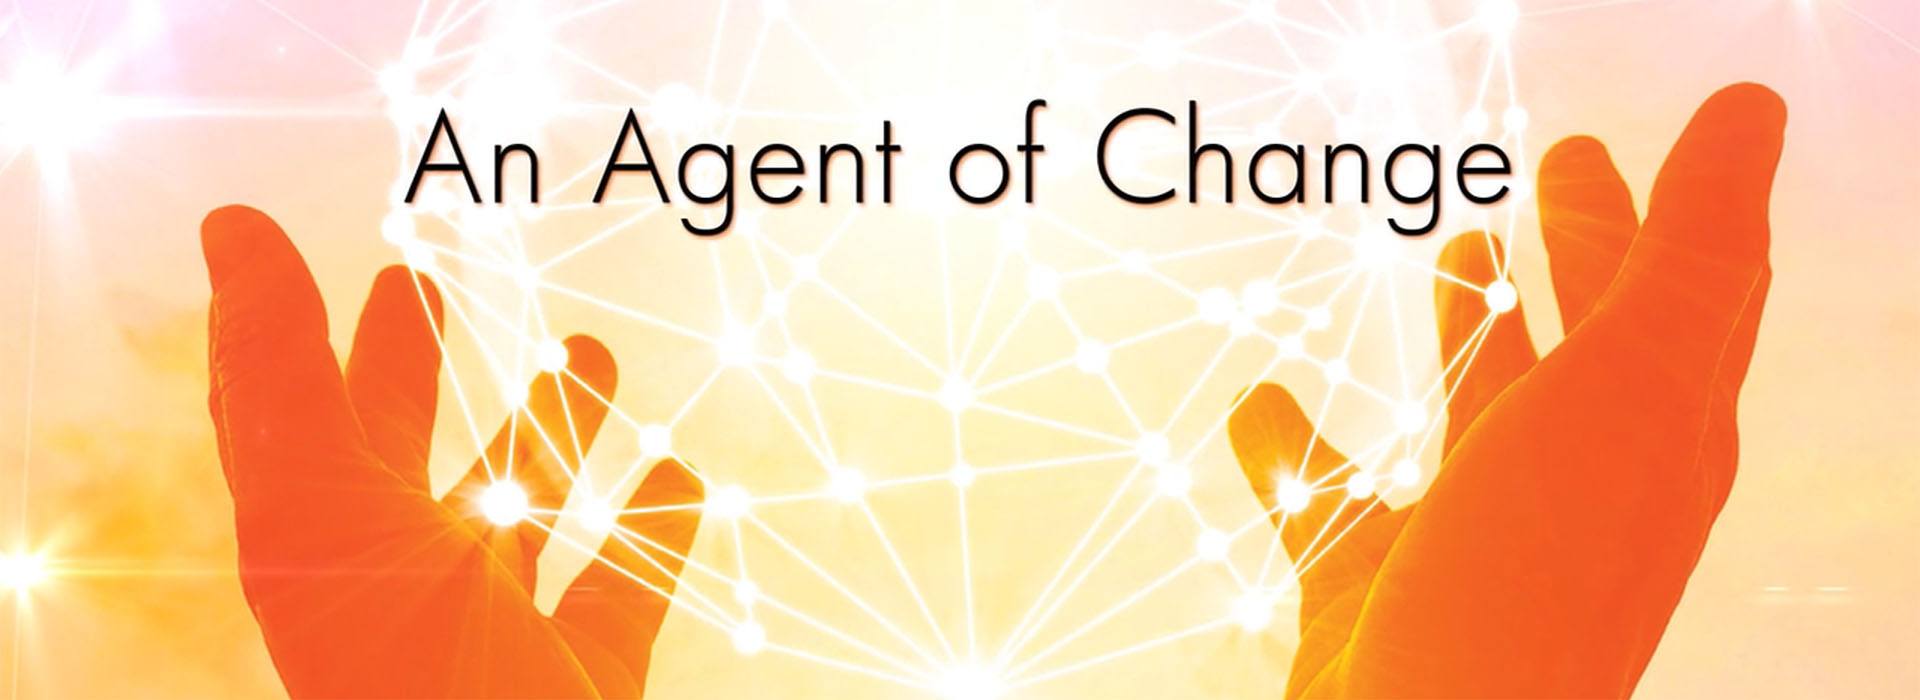 Chem-Trend Zyvax® 1070W Release Agent of Change